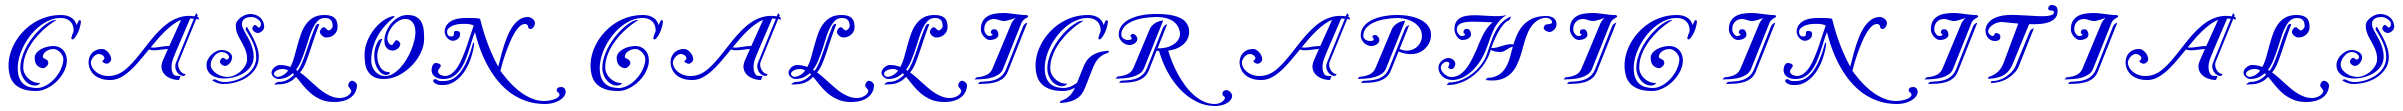 Caslon Calligraphic Initials font